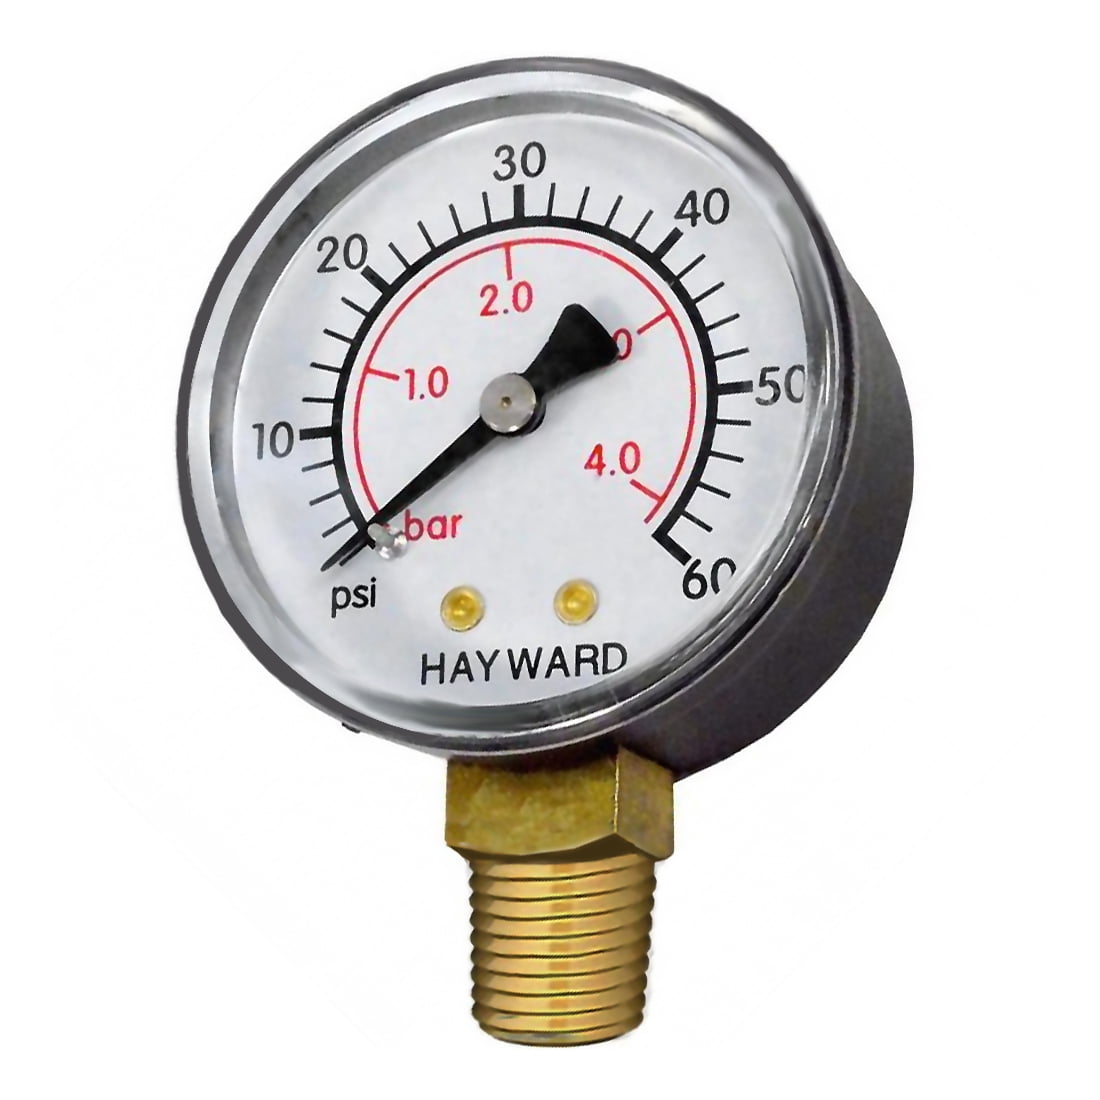 NEW Pressure Gauge WOG air compressor hydraulic 1.5"face 0-160 lower mnt 1/8"npt 